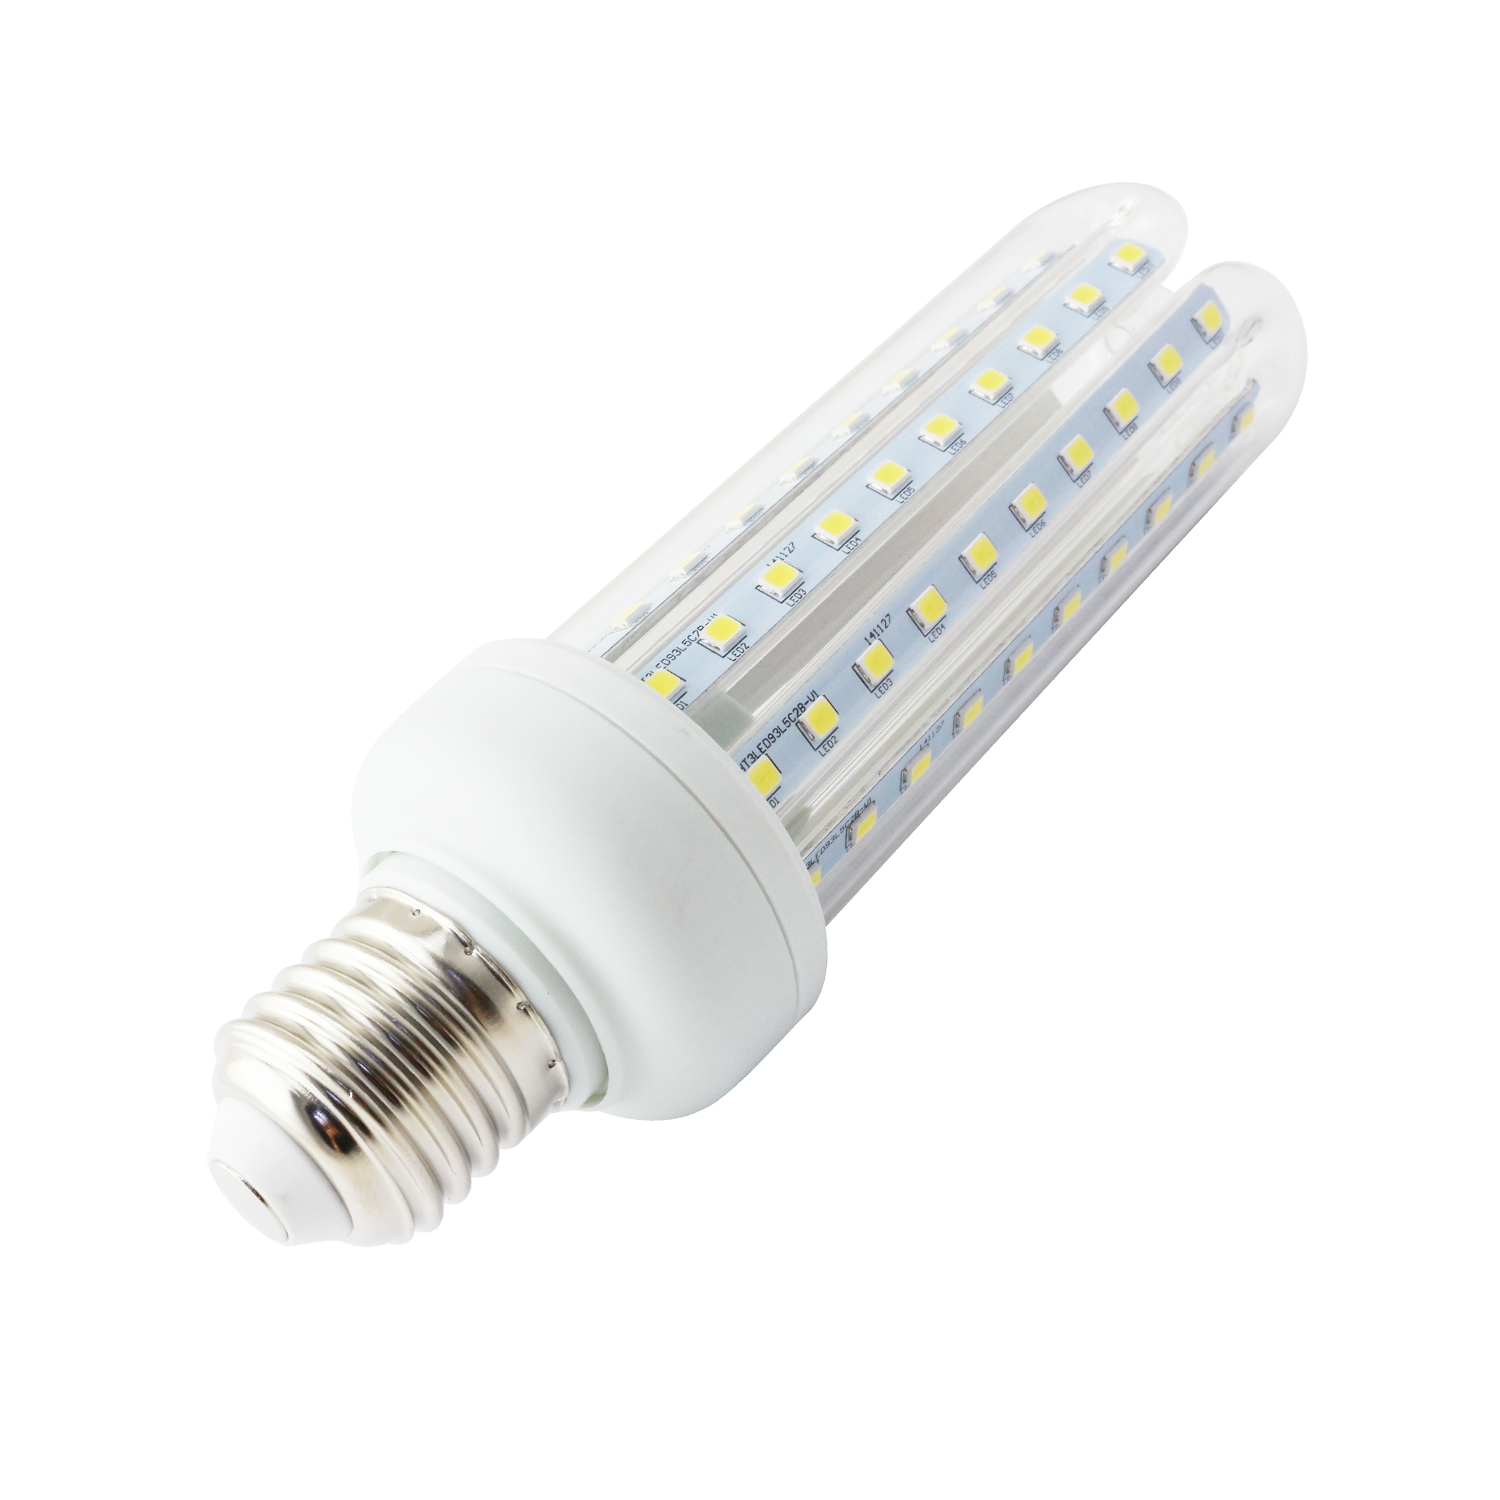 Aigostar - Confezione da 5 Lampadine LED B5 T3 4U, 19W, Attacco Grande E27, 1500 lumen, Luce Calda 3000K [Classe di efficienza energetica A+]